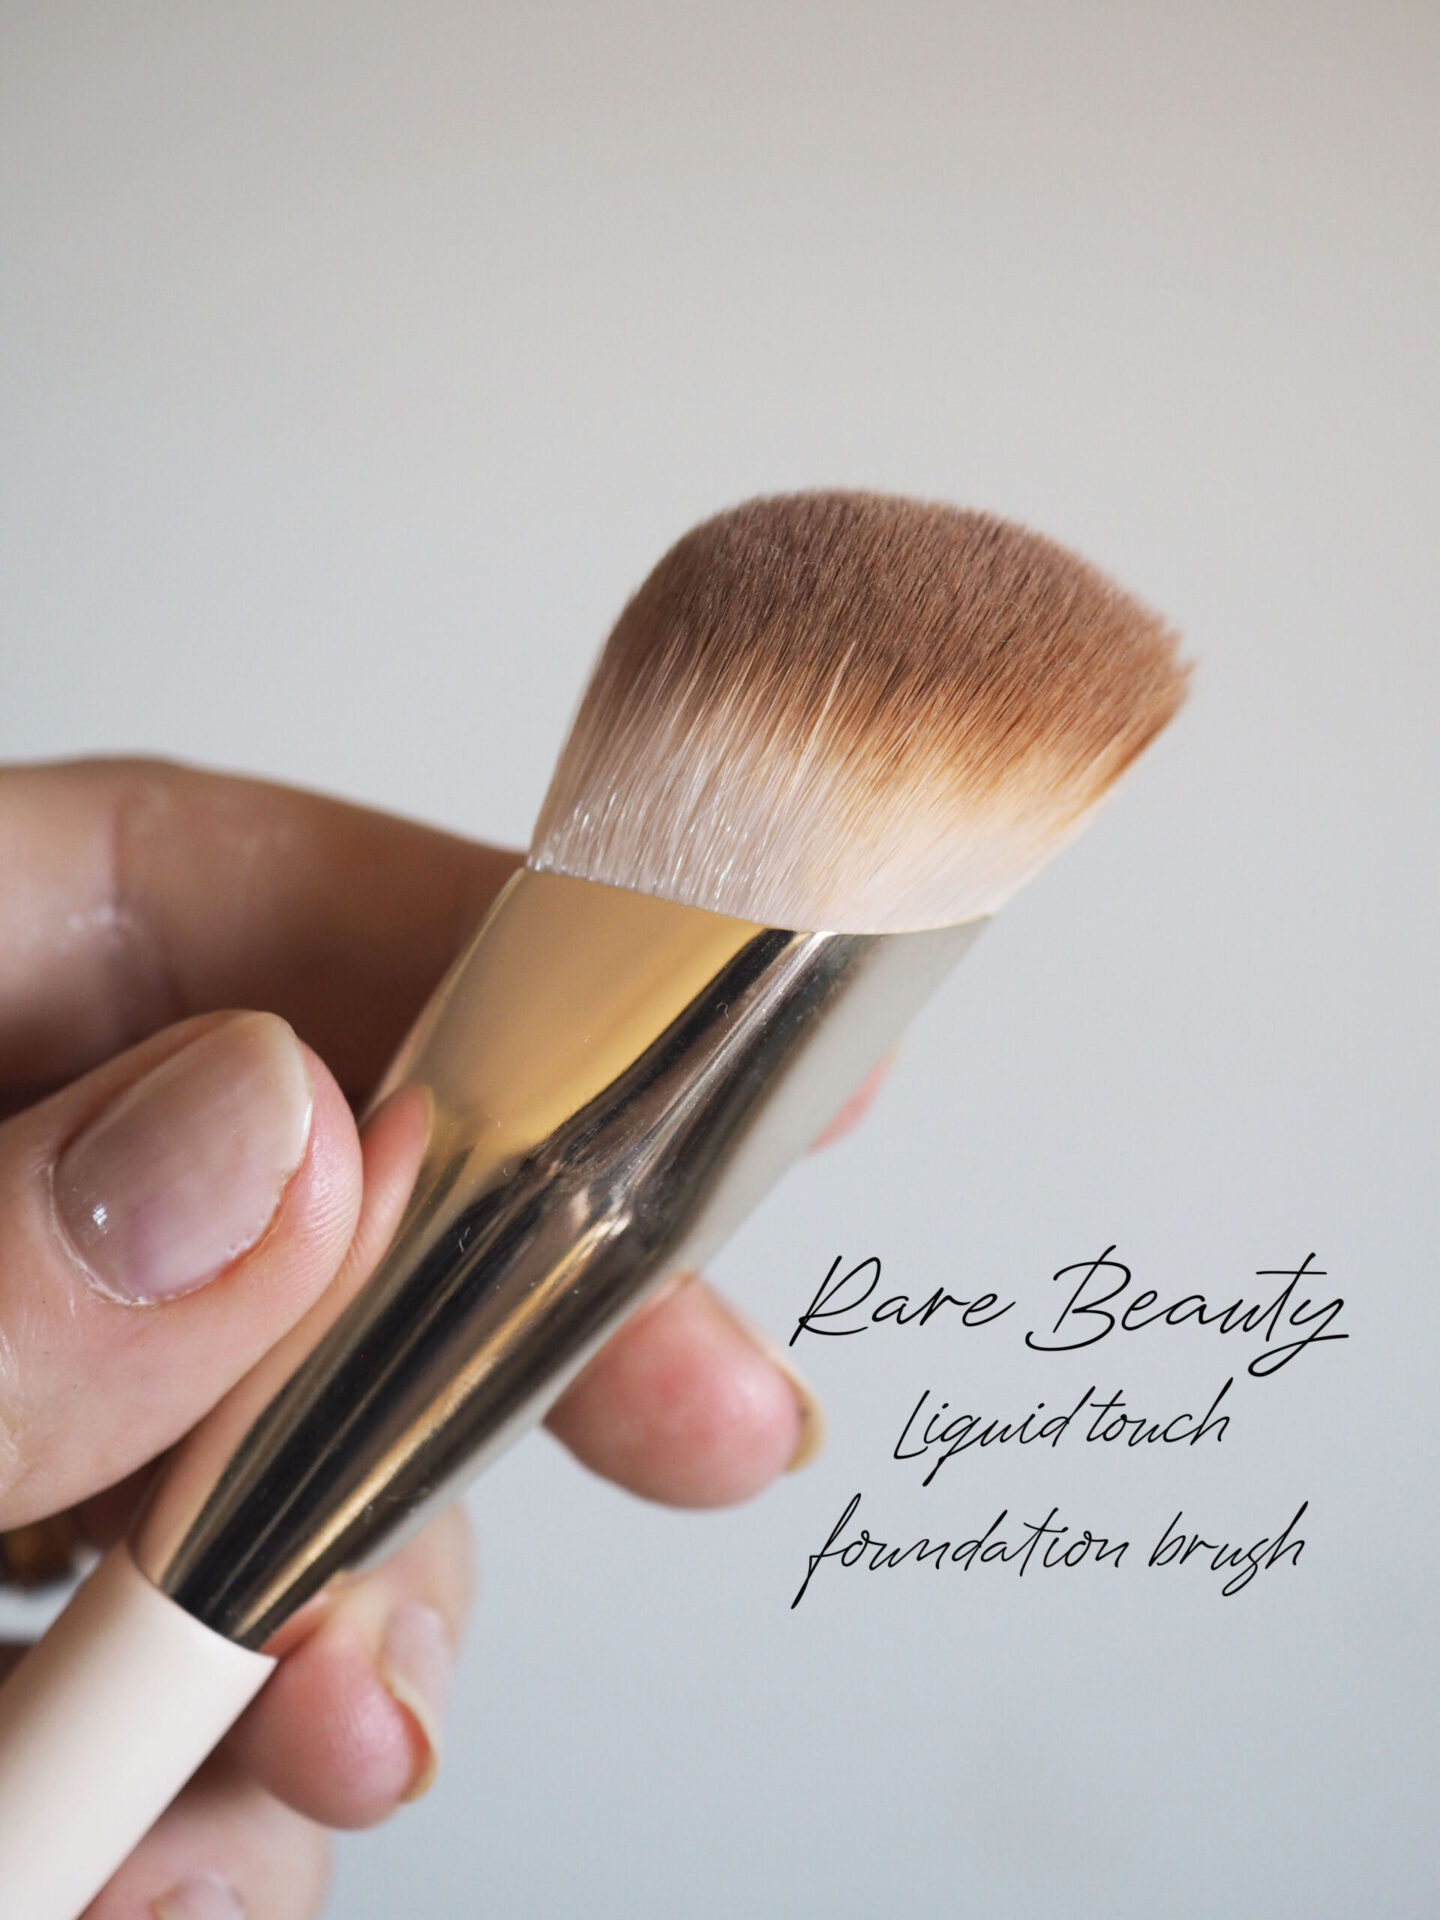 rare beauty liquid touch foundation brush